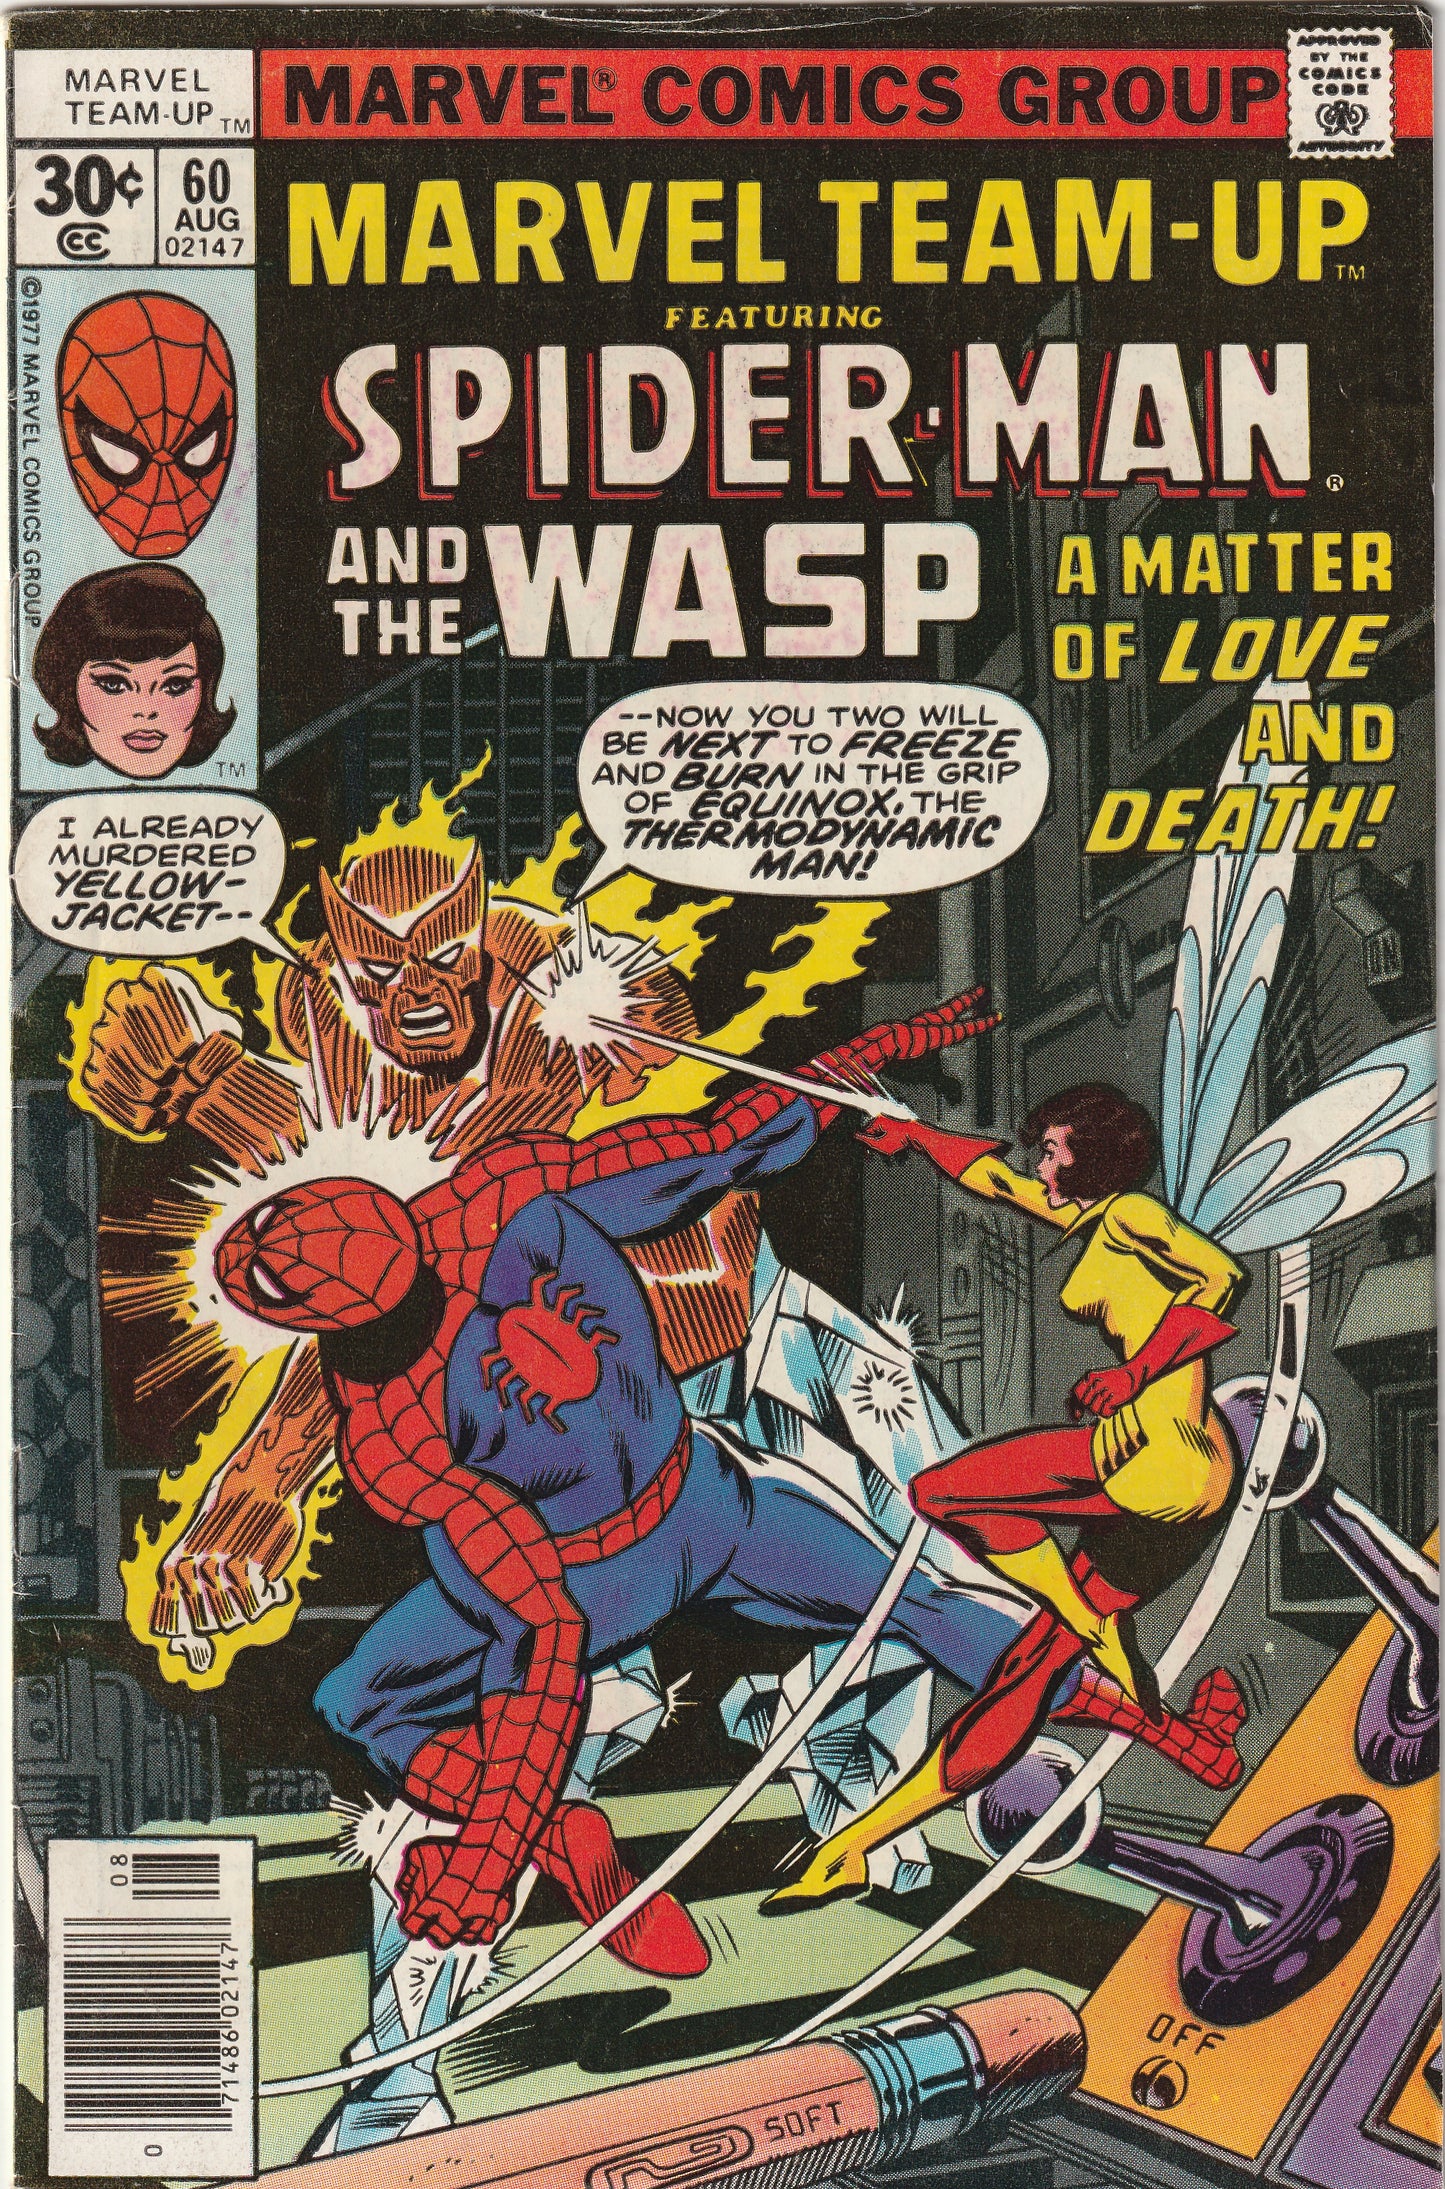 Marvel Team-Up #60 (1977) - Spider-Man & the Wasp - Equinox Origin revealed